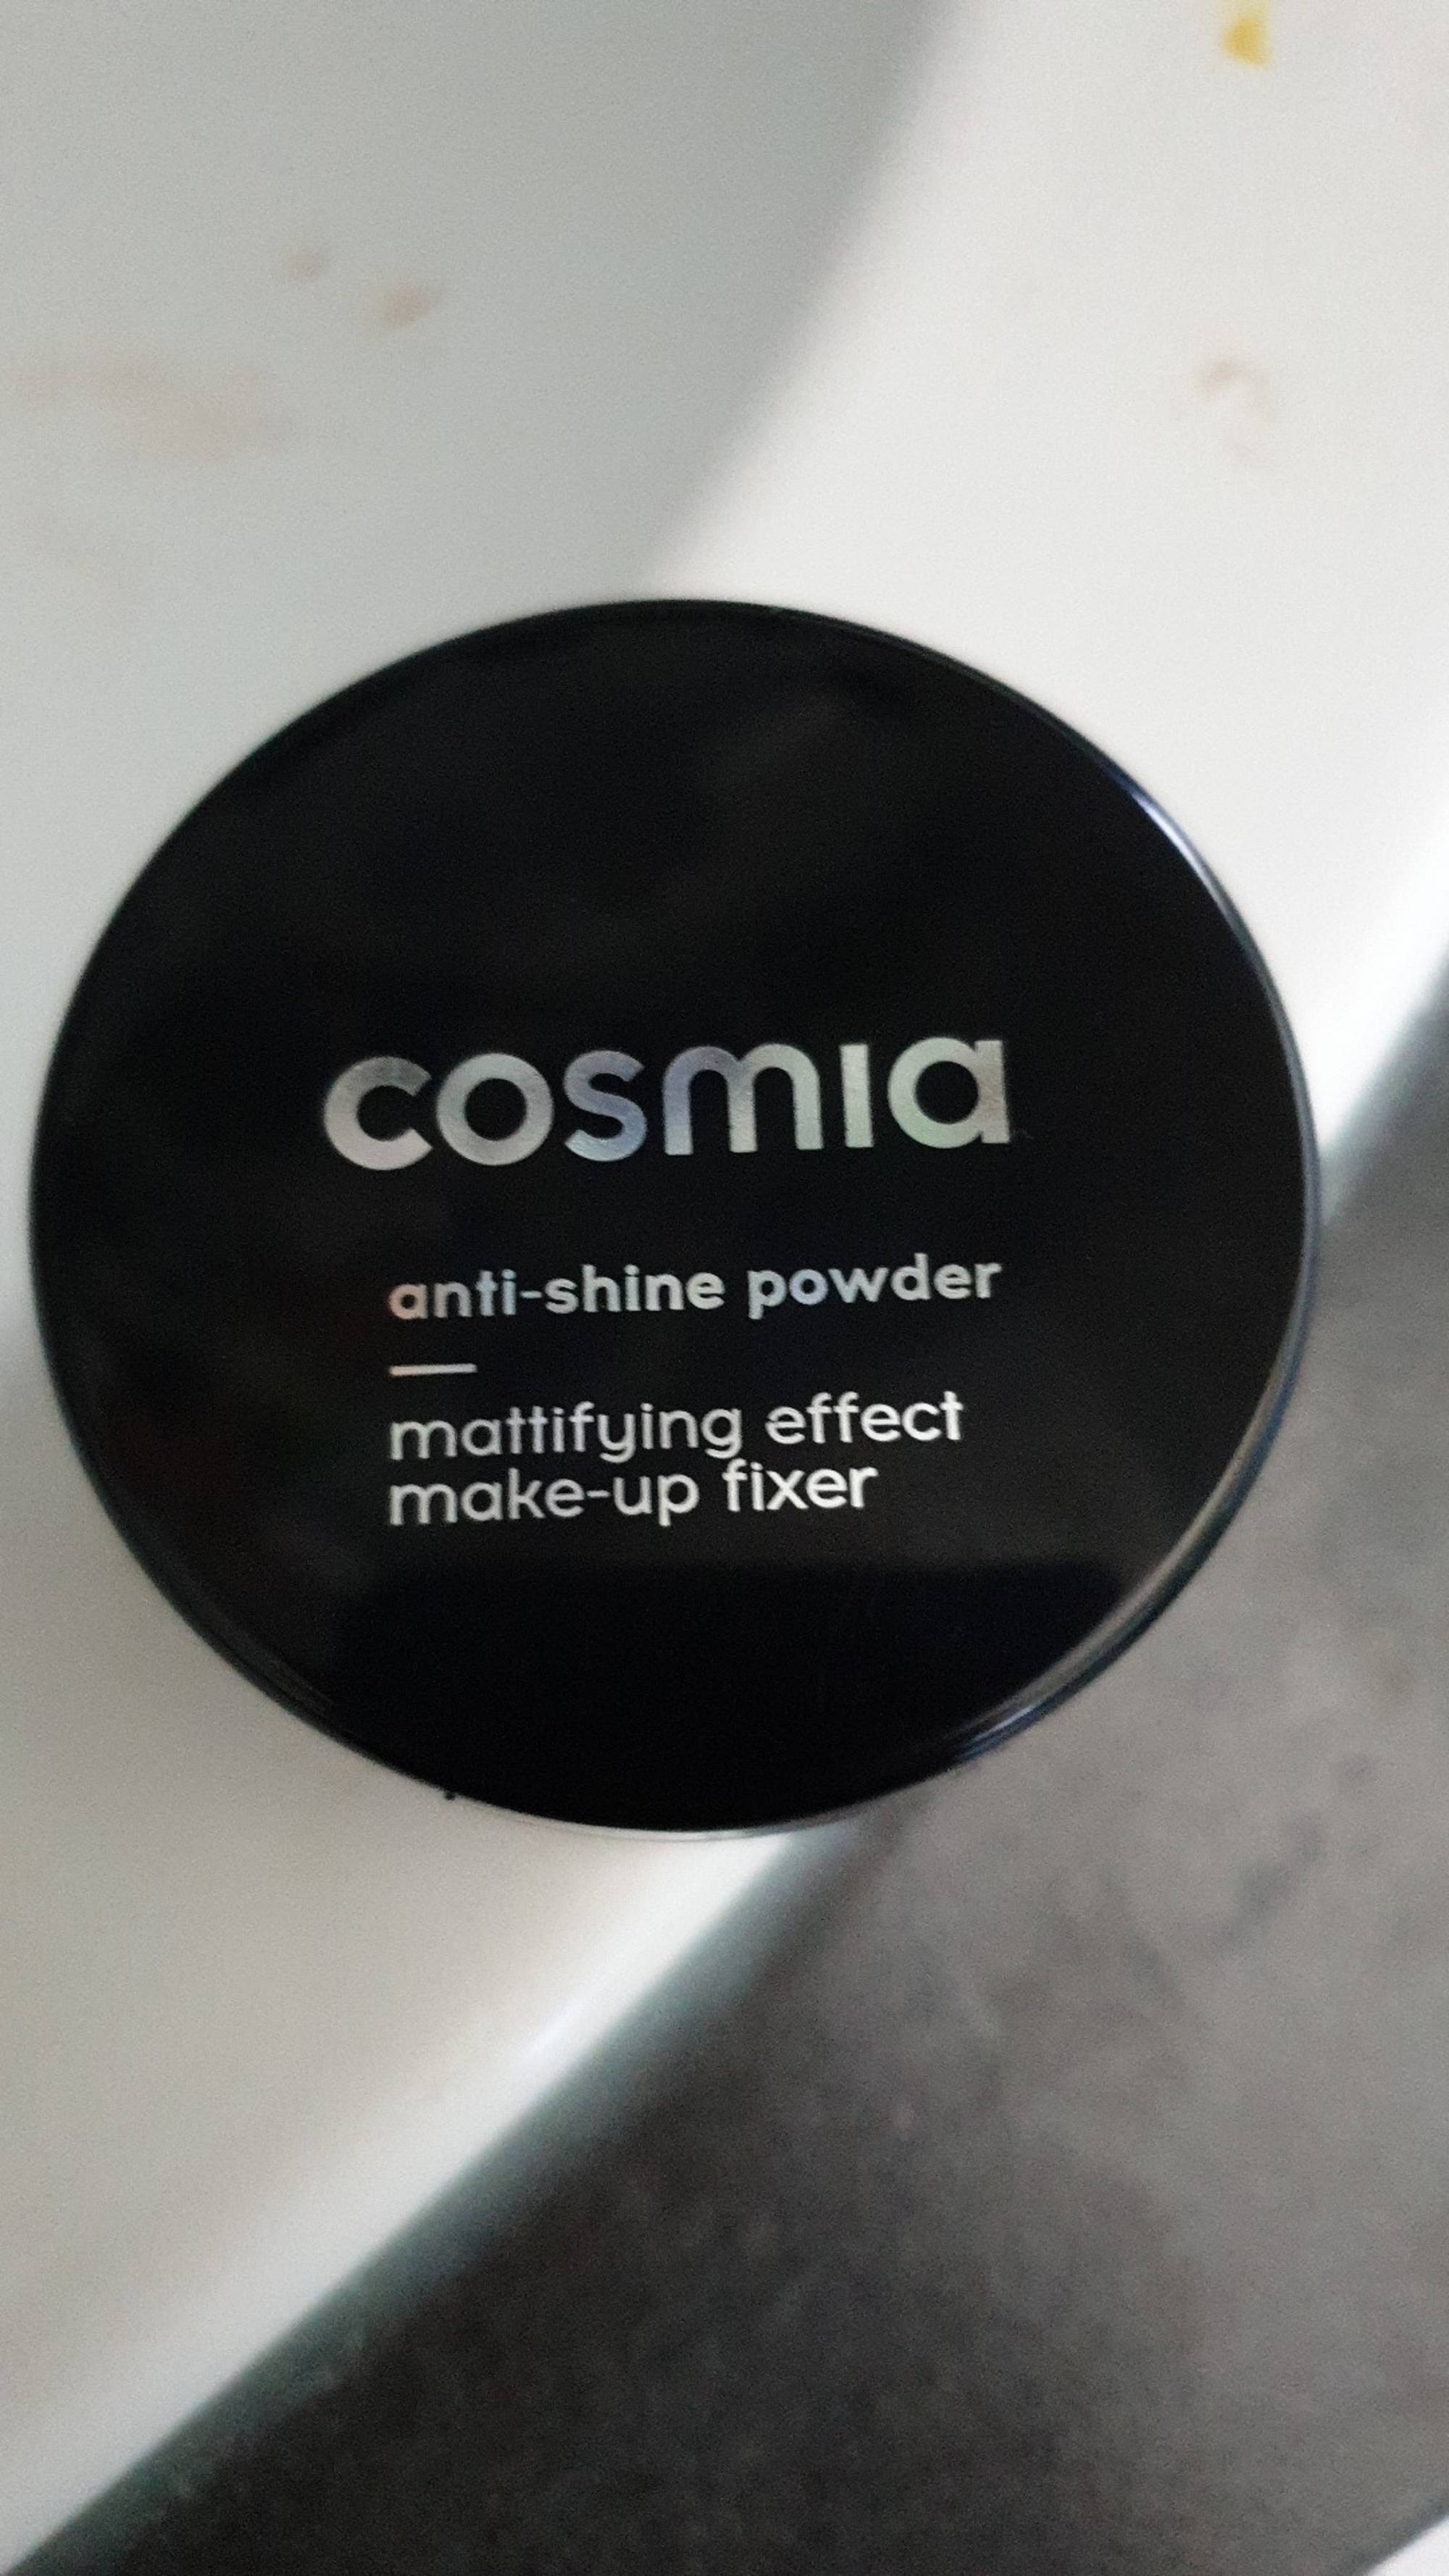 COSMIA - Anti-shine powder - Mattifying effect make-up fixer